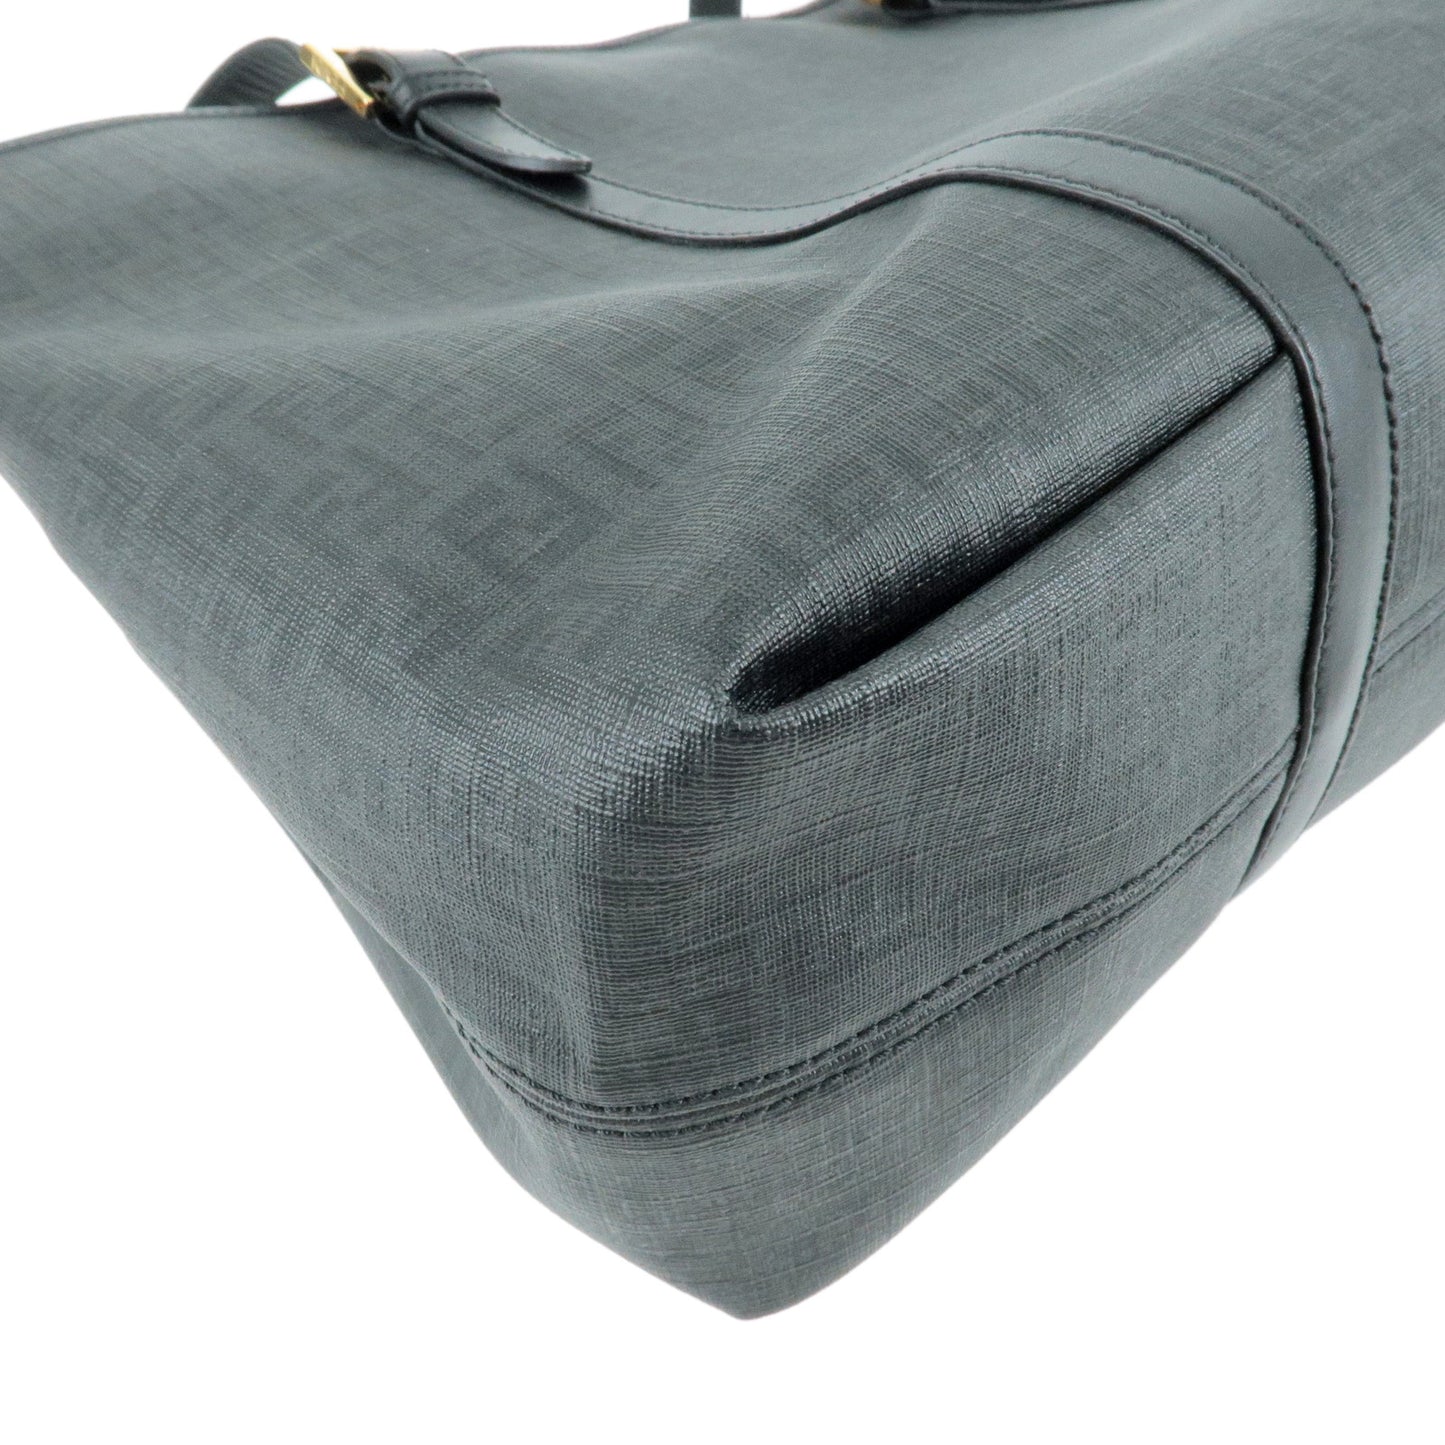 FENDI Zucchino PVC Leather Tote Bag Shoulder Bag Black 8BH238